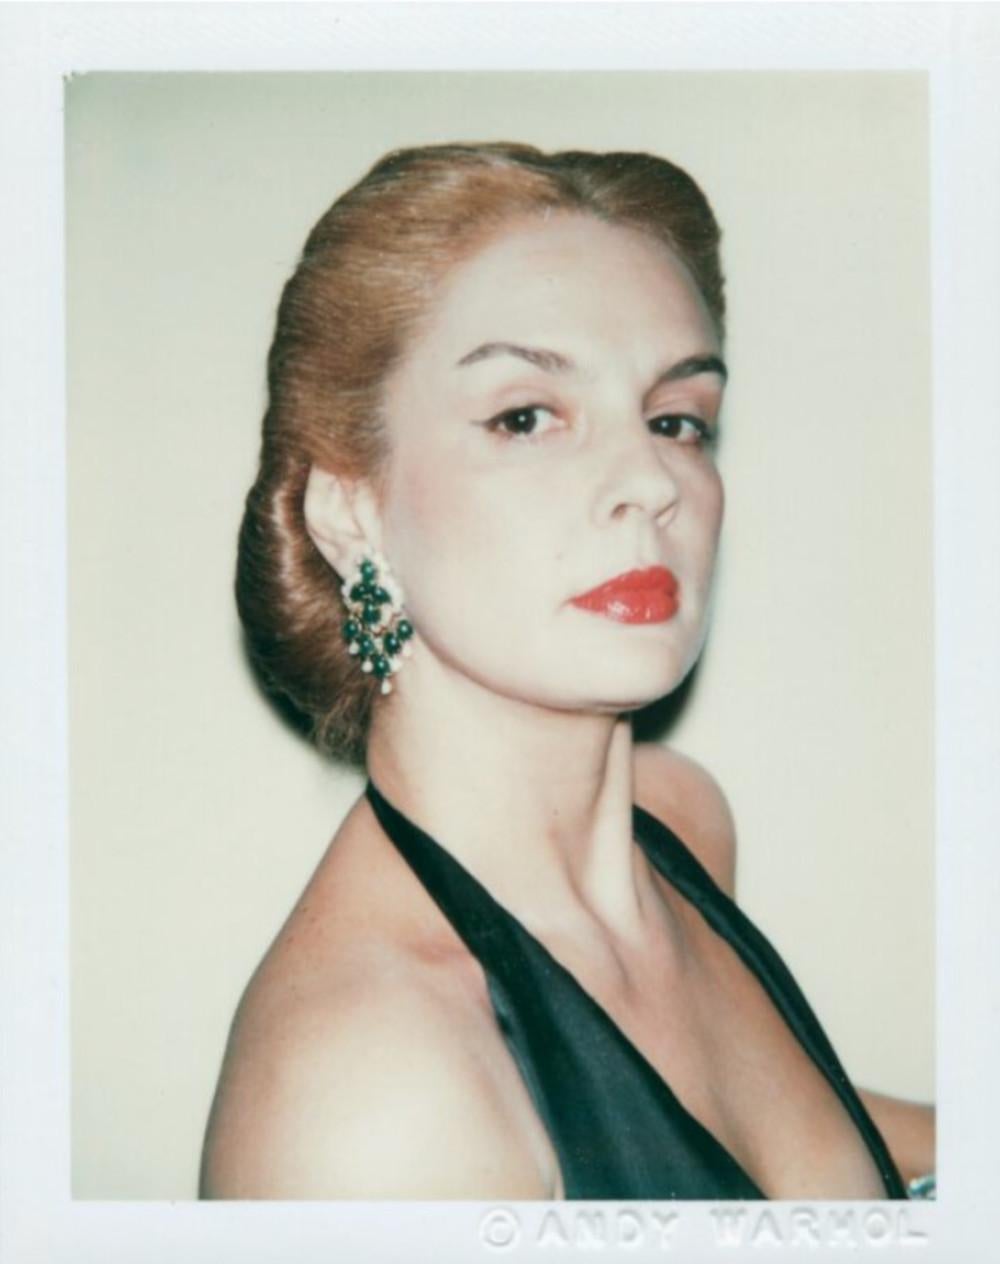 Andy Warhol Portrait Photograph – Carolina Herrera